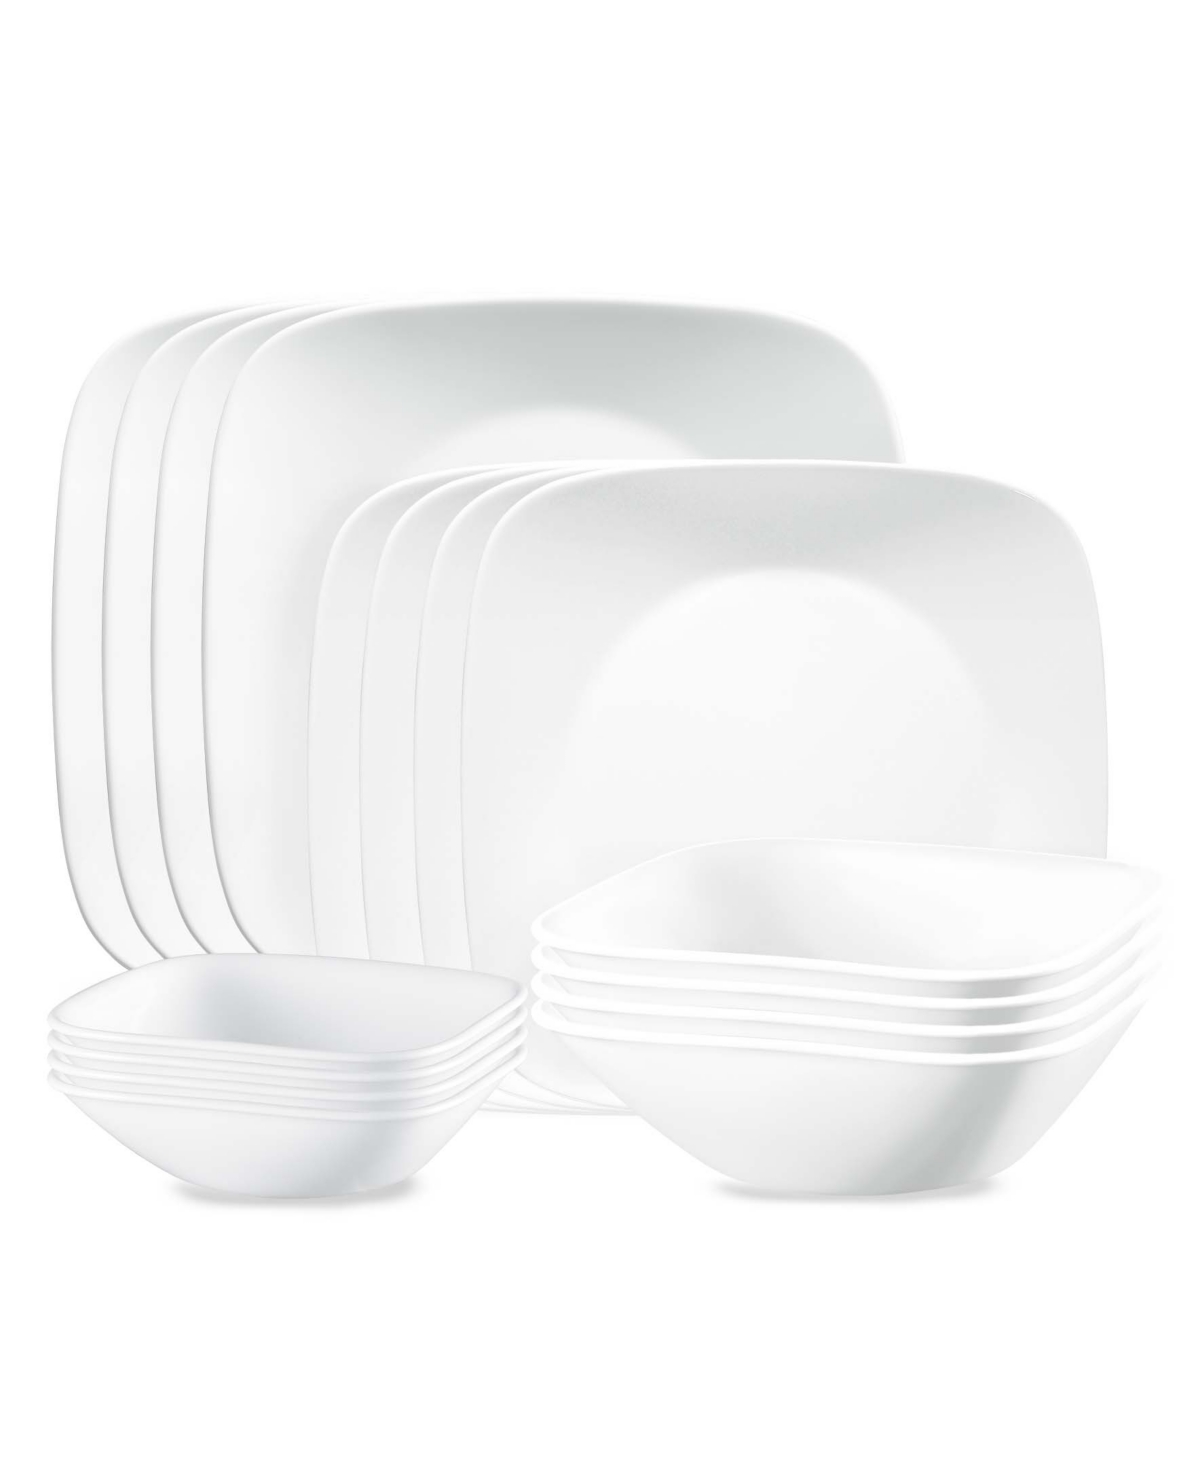 Vivid White 16 Piece Dinnerware Set, Service for 4 - White